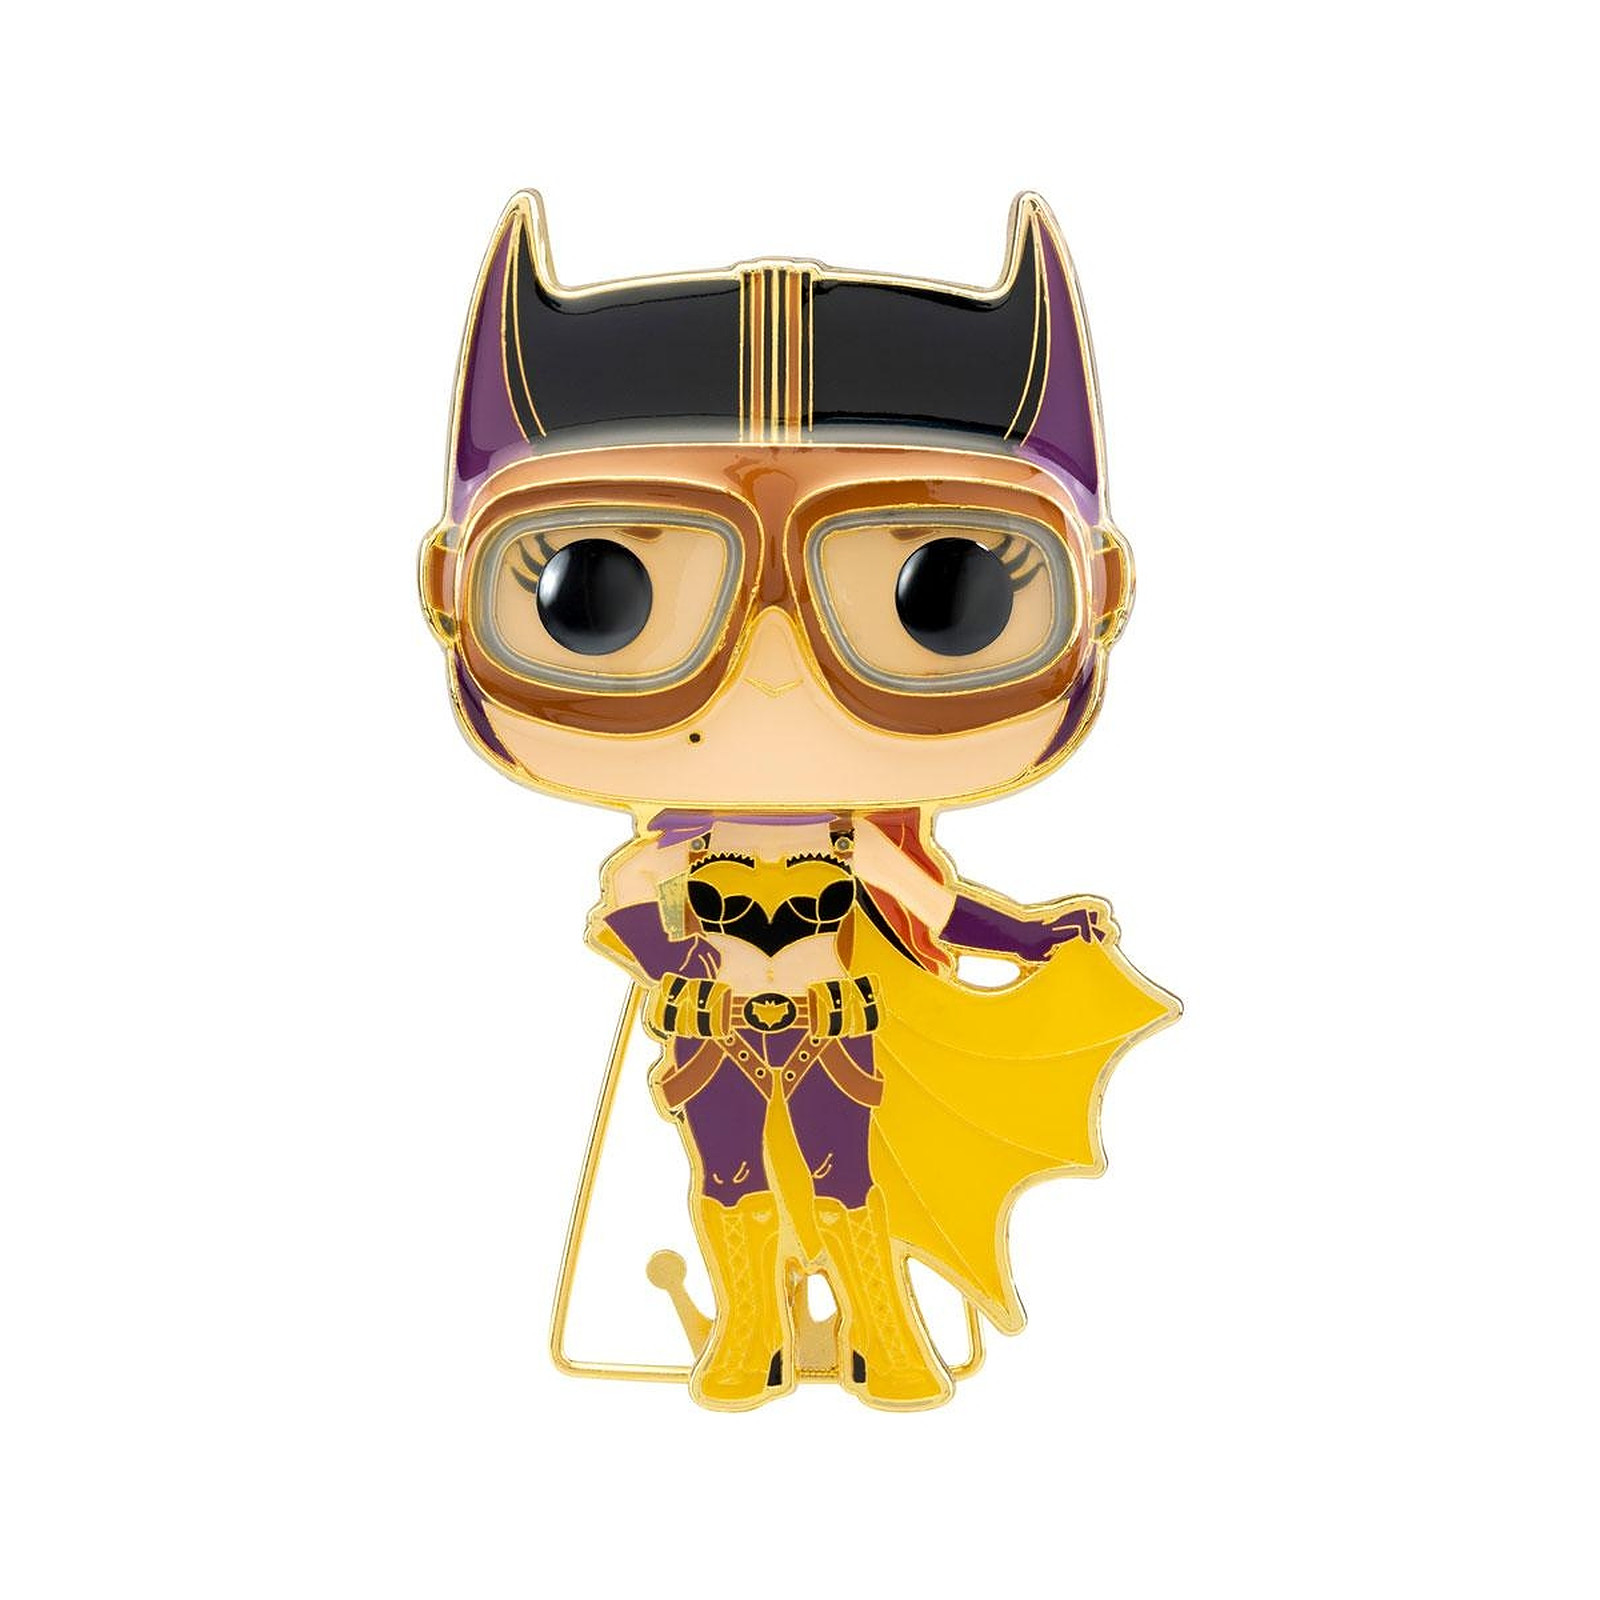 DC Comics - Figurine POP! Pin pin's emaille Batgirl 10 cm - Figurines Funko